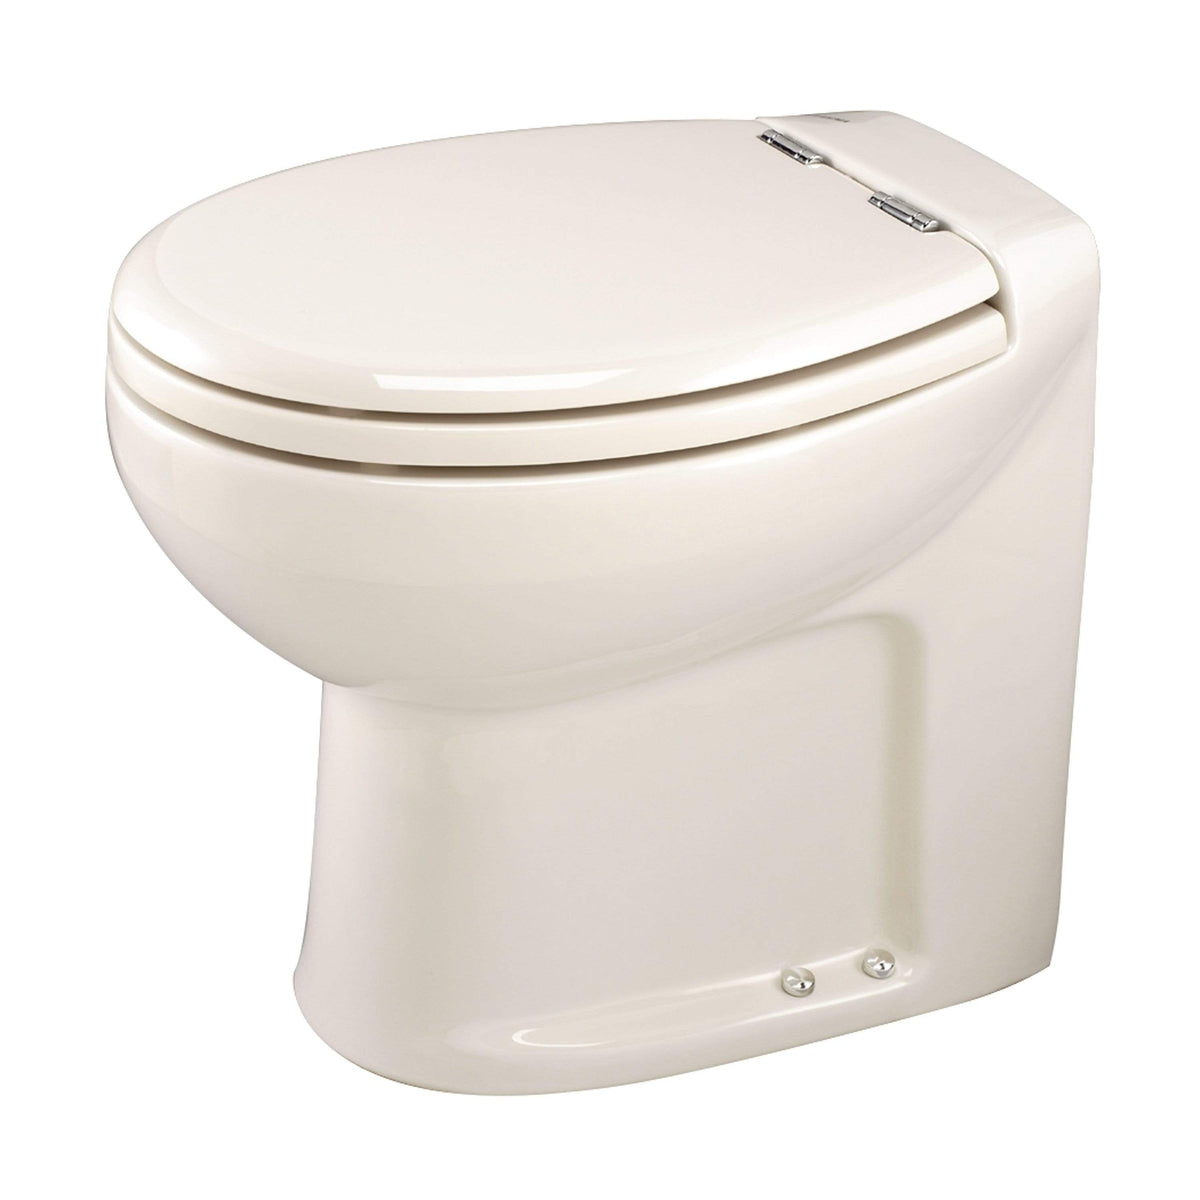 Thetford Not Qualified for Free Shipping Thetford Tecma Silence Plus 1 Mode 24v RV Toilet Bone #38035